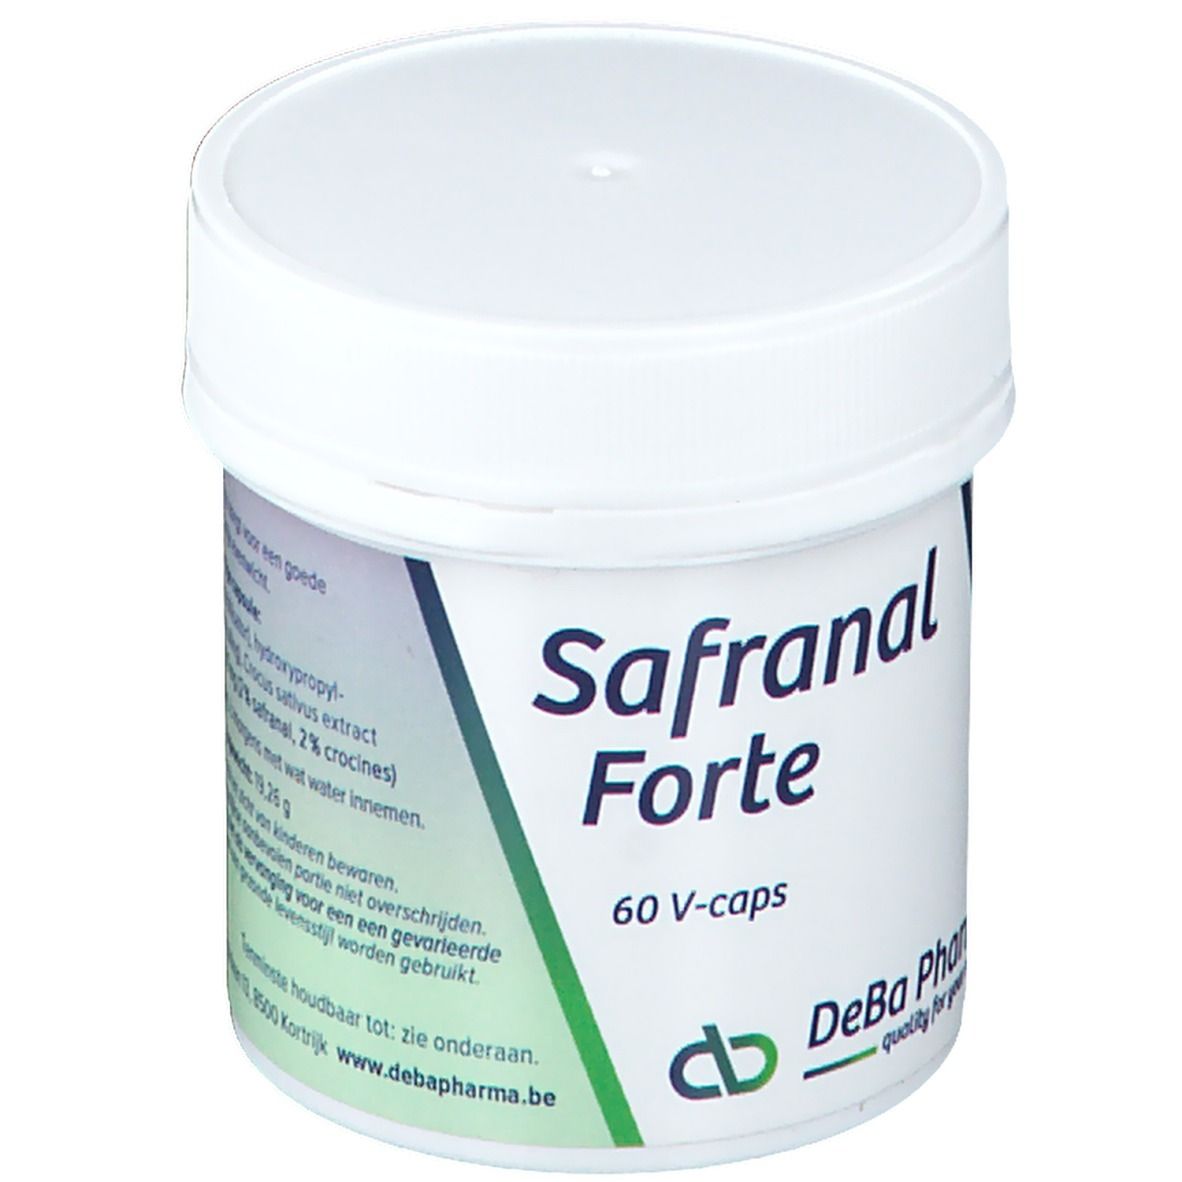 Deba Pharma Safranal Forte